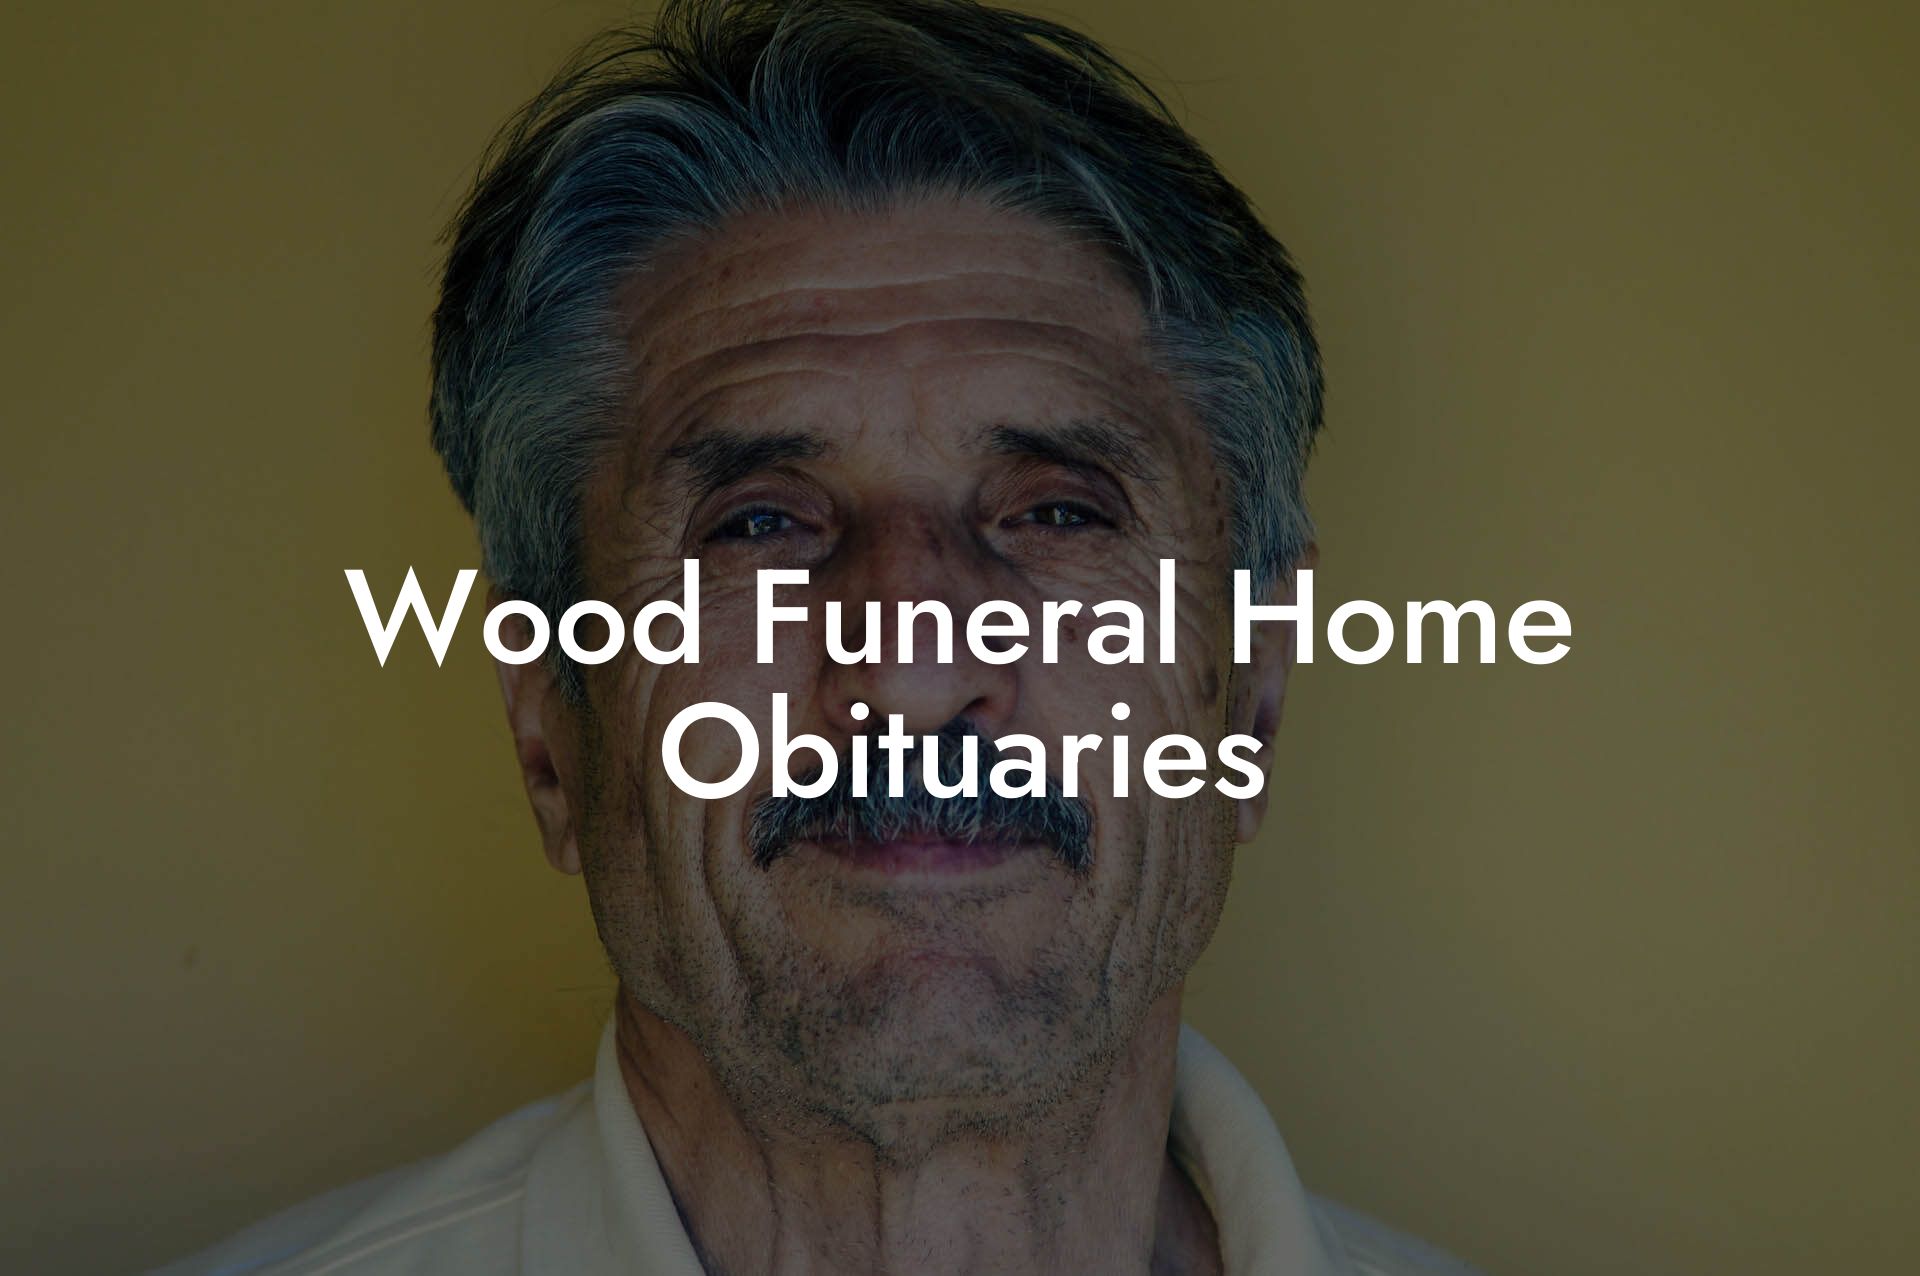 Wood Funeral Home Obituaries